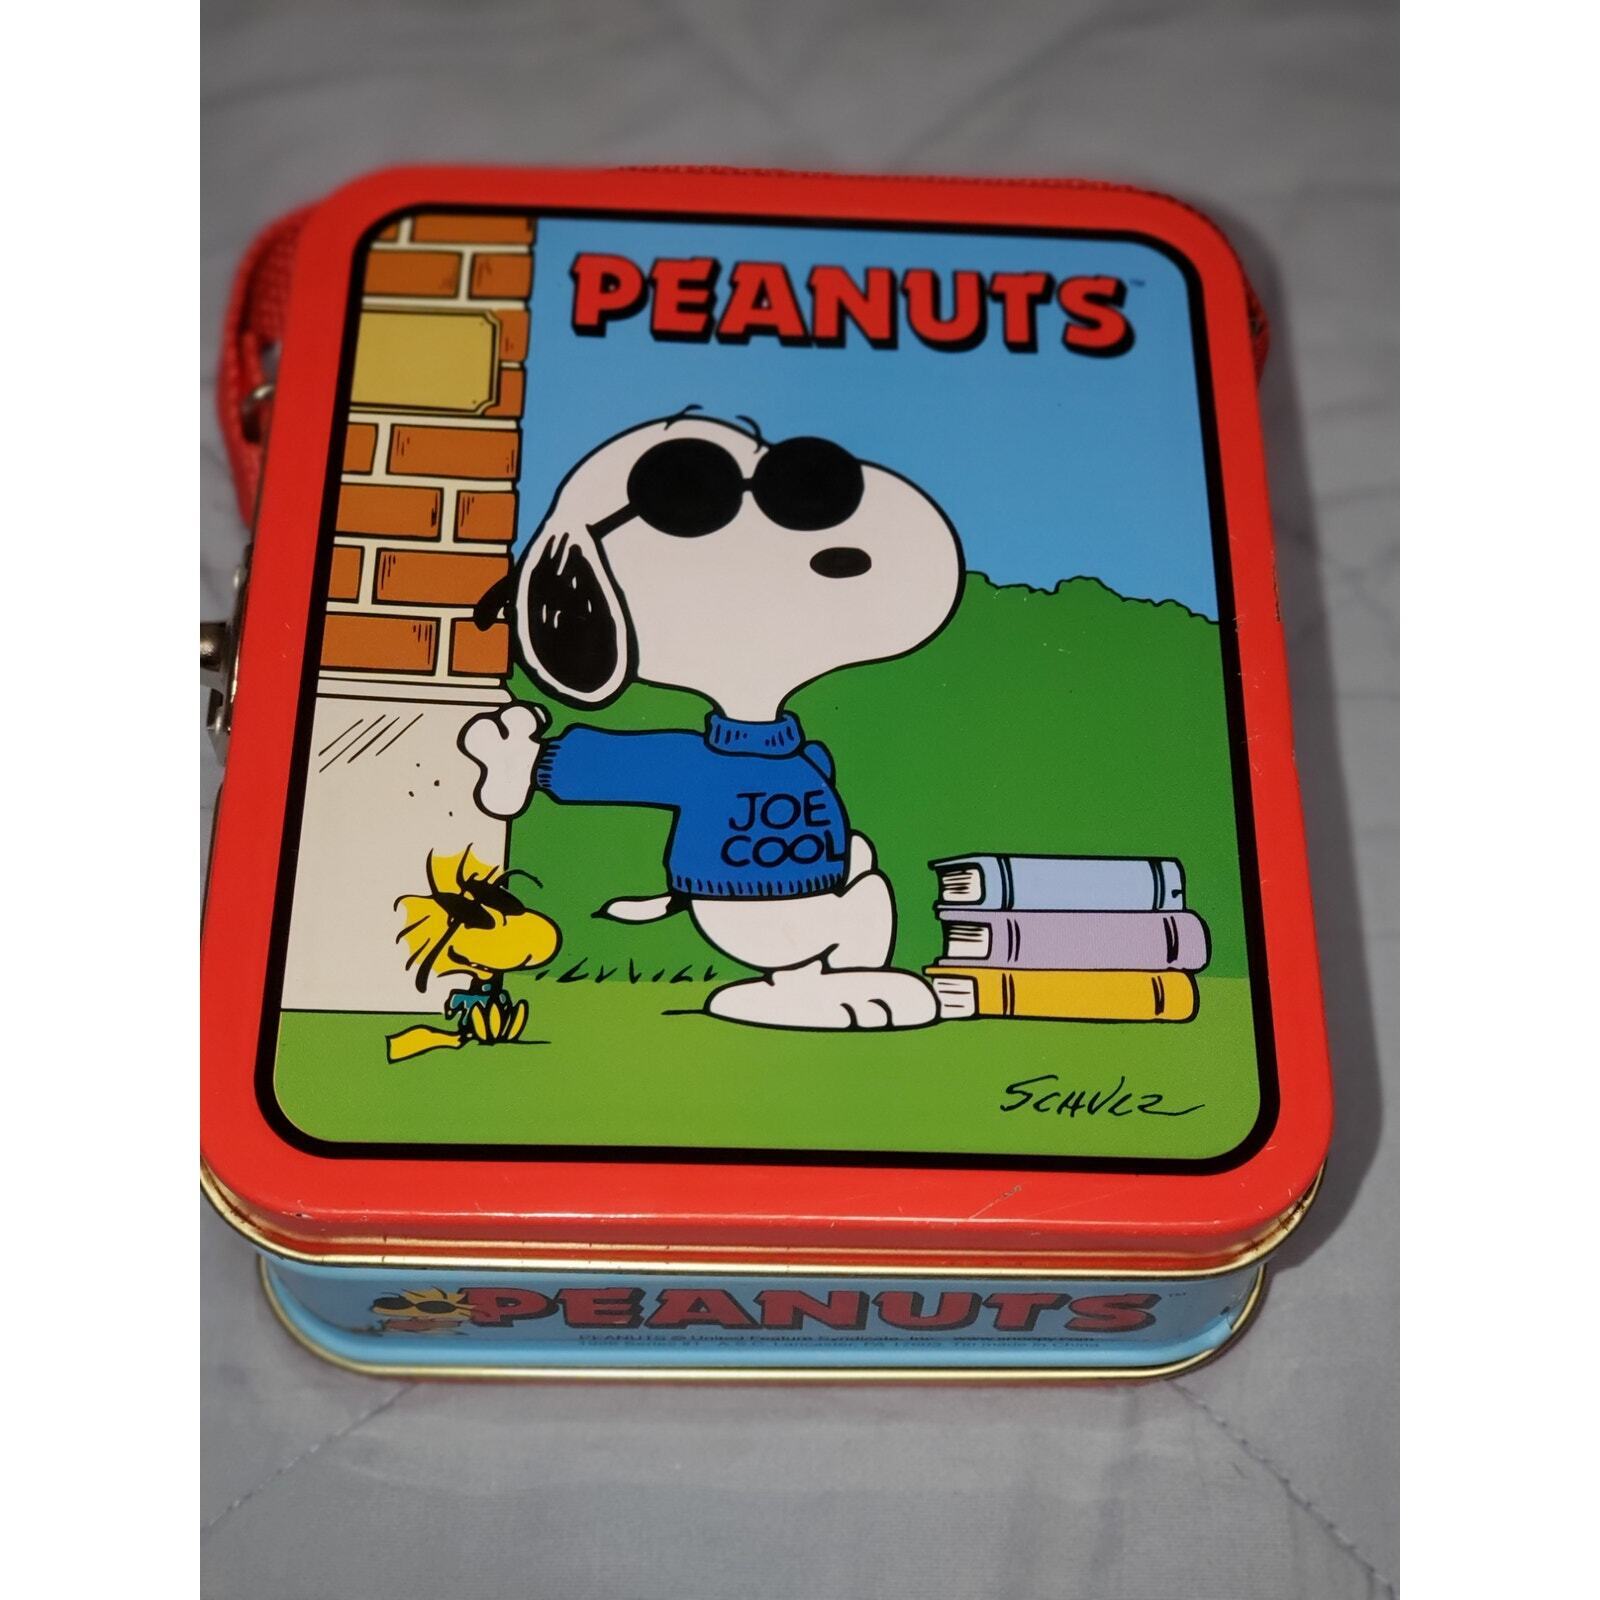 Peanuts Snoopy Mini Tin Lunch Box or Crayon Case 1999 series 1